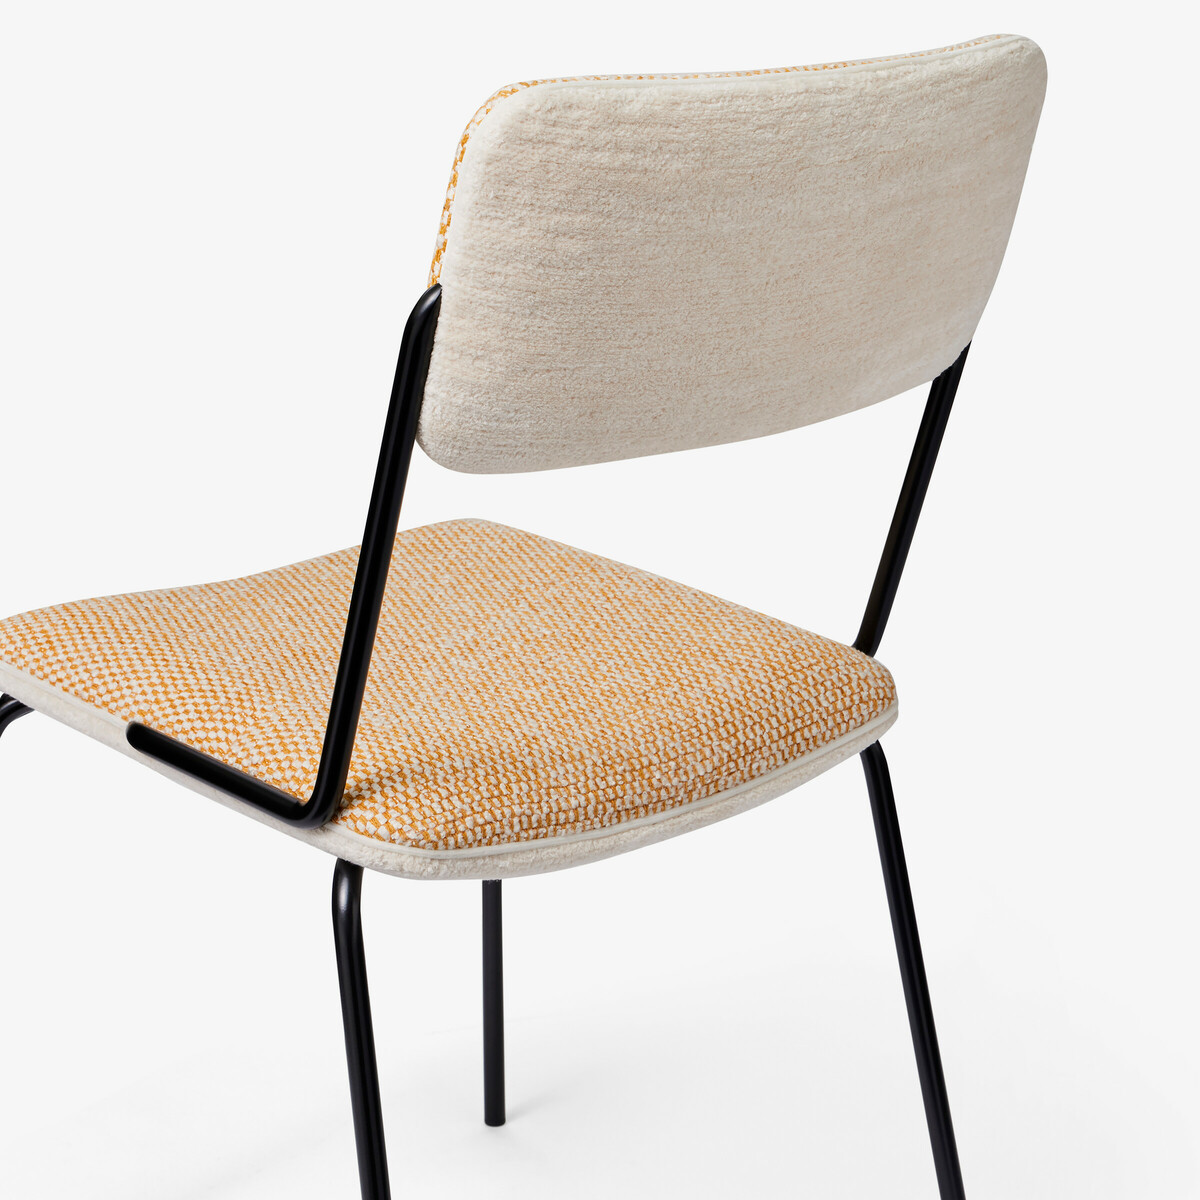 Chair Double Jeu - Publisher Fabric, Ocre - H85 x W51 x D43 cm - Steel /Cotton - image 2